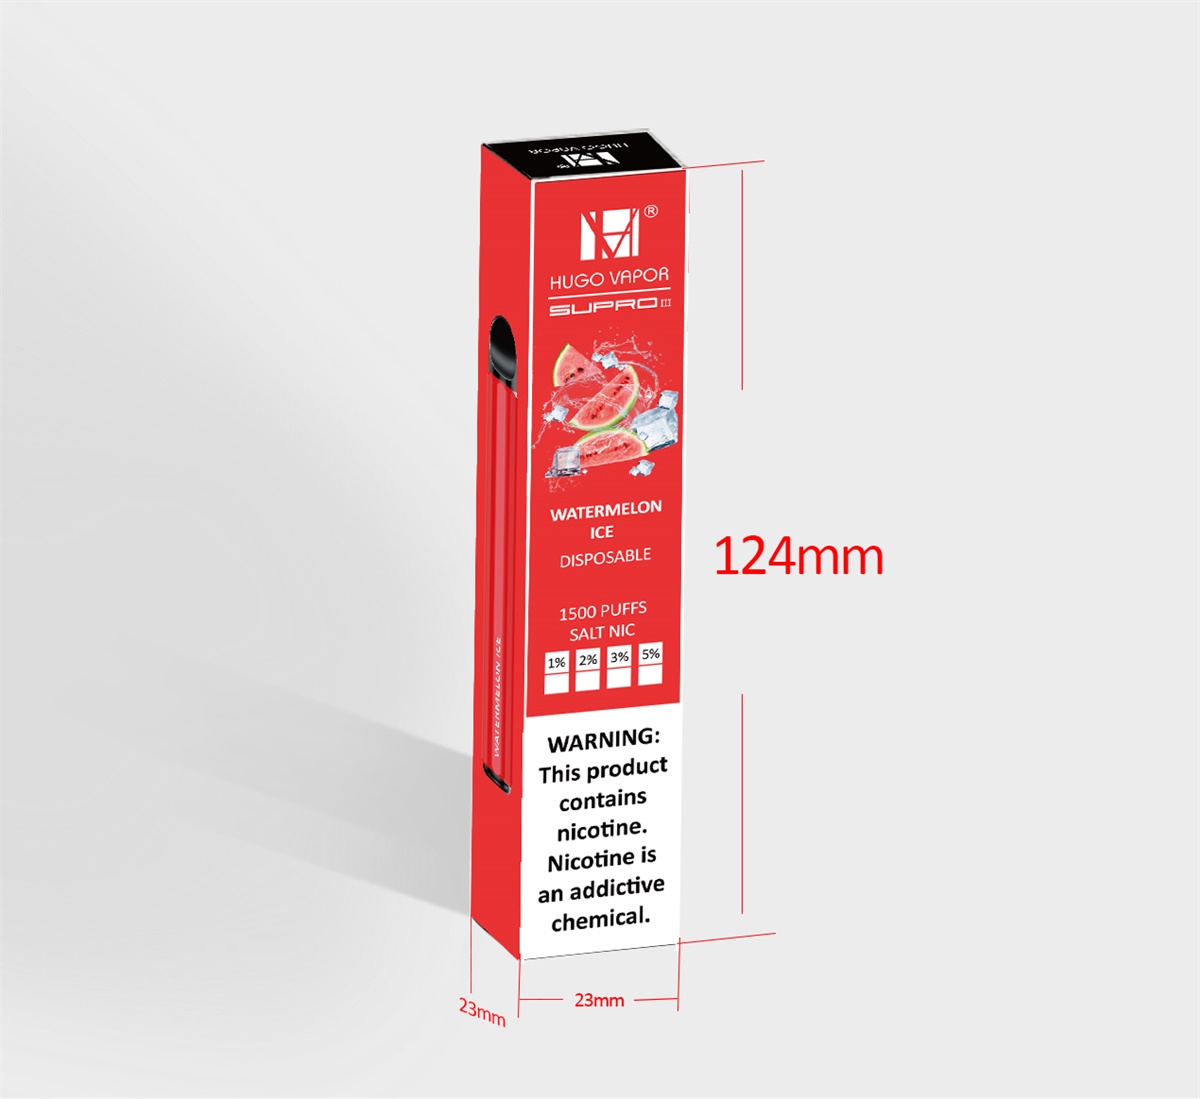 Hugo Vapor Supro 3 Disposable Package Size